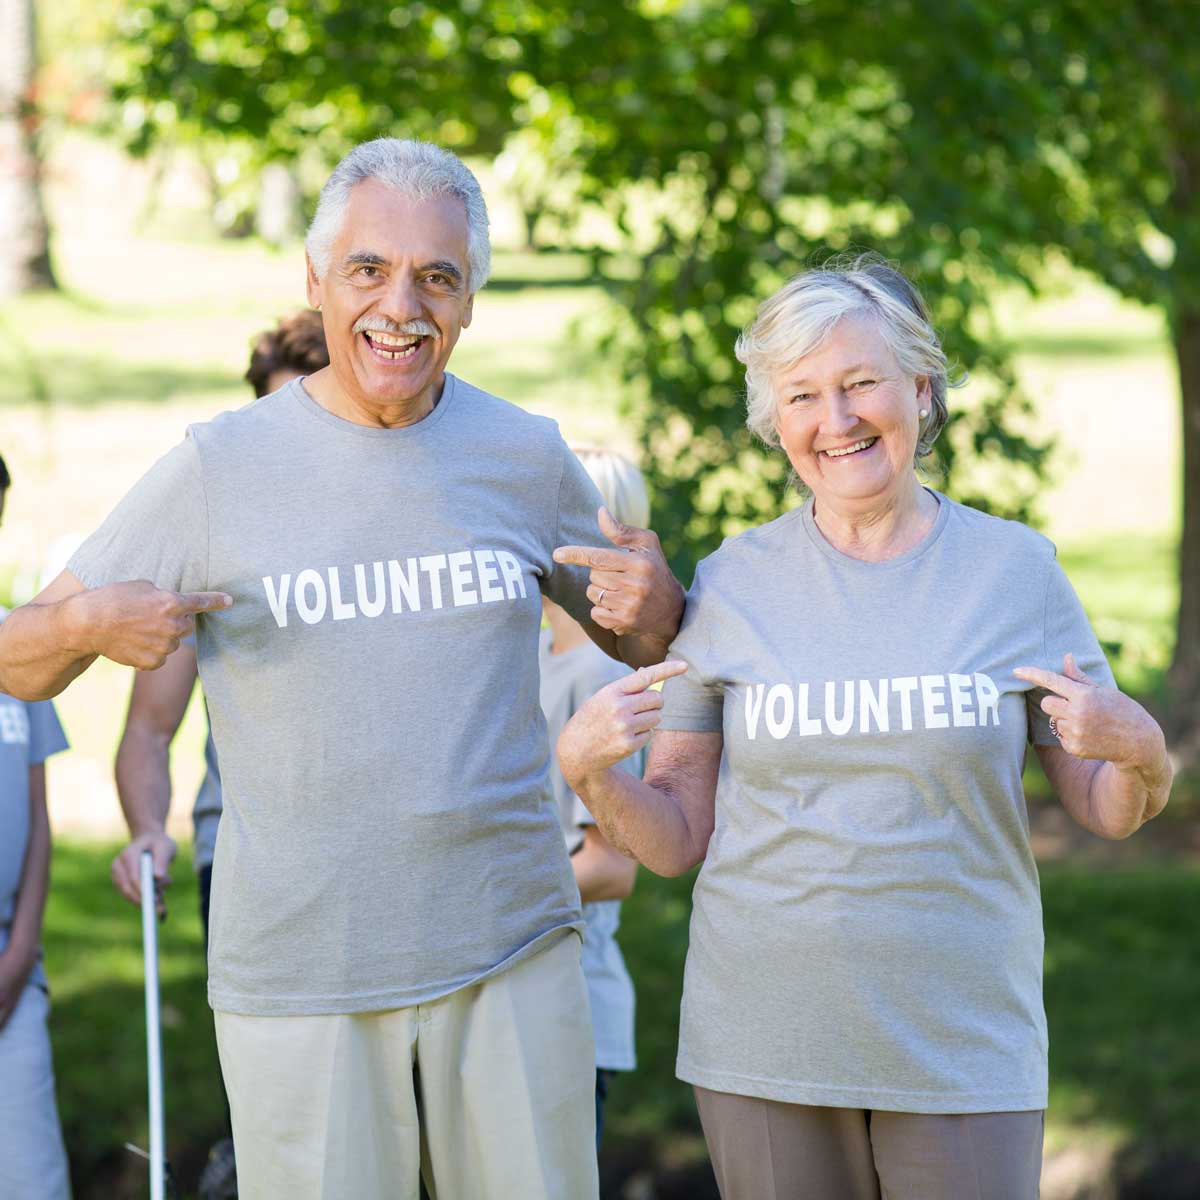 Volunteering keeps you active and it is very rewarding